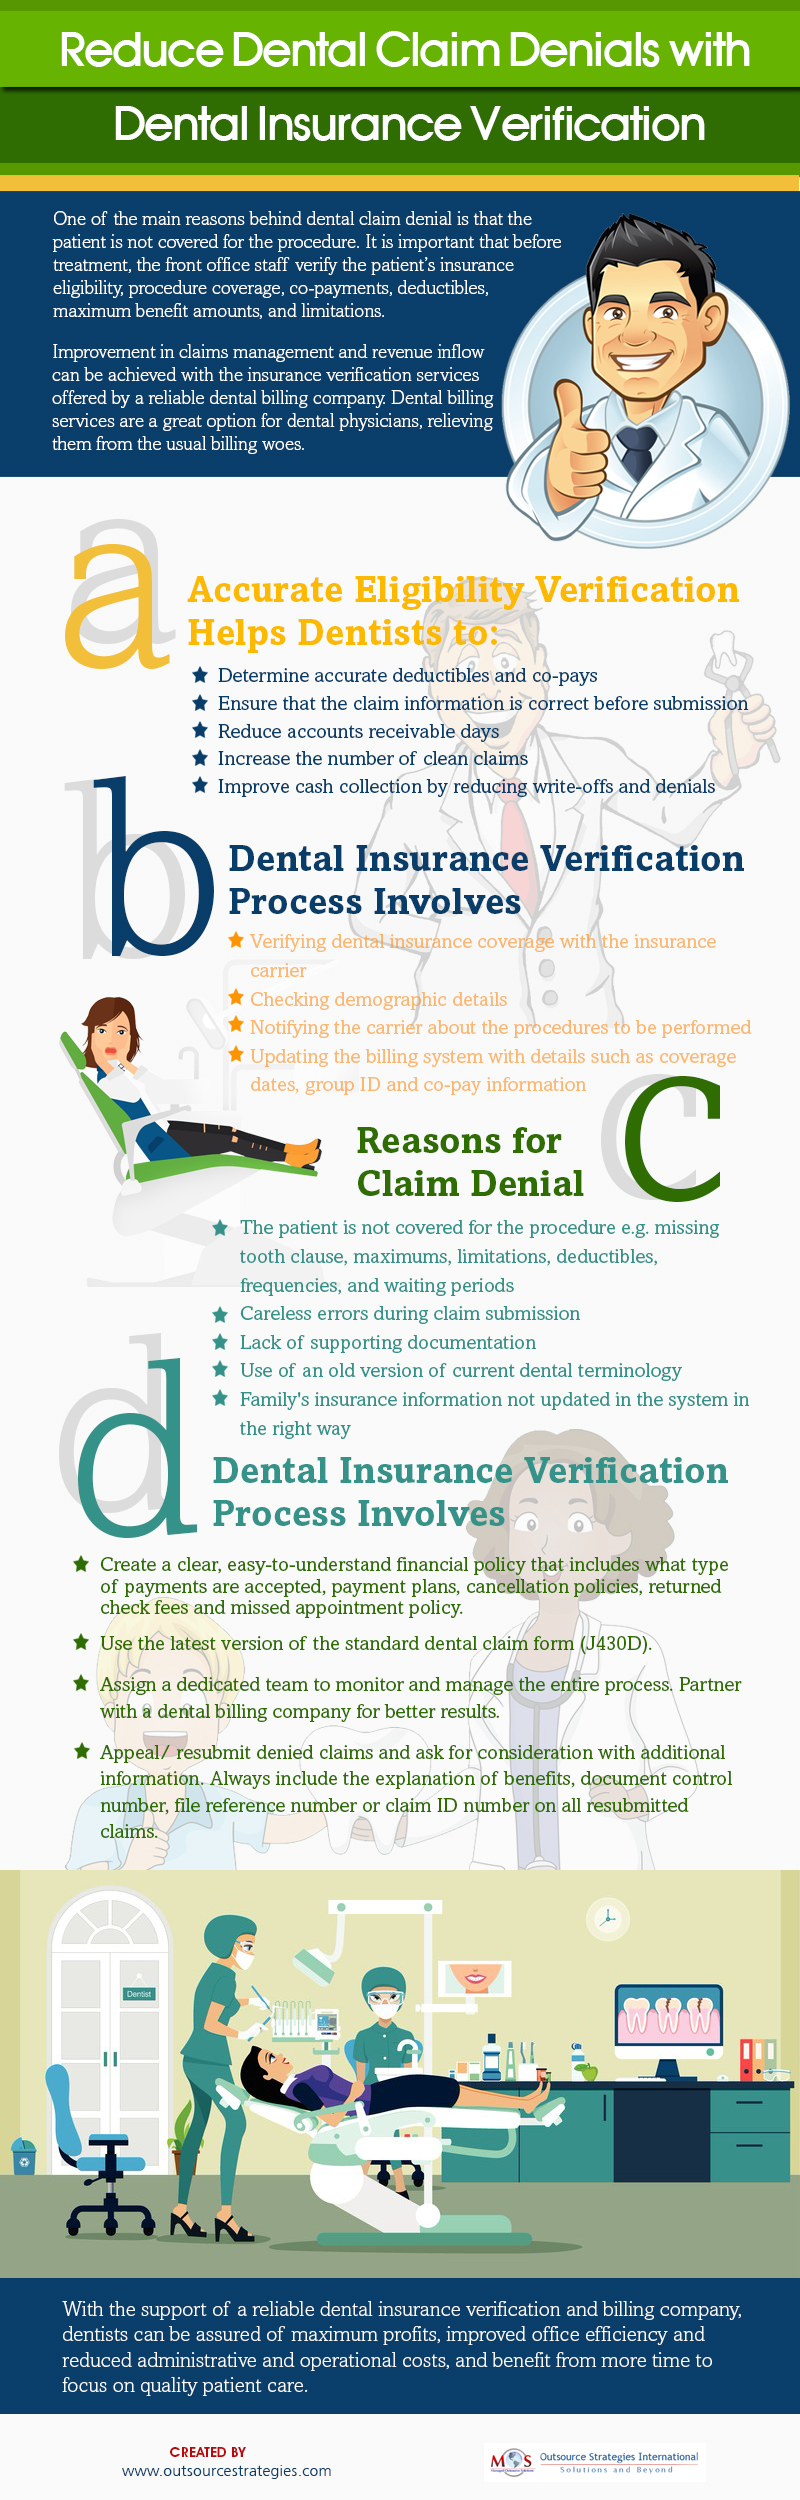 Reduce Dental Claim Denials with Dental Insurance Verification